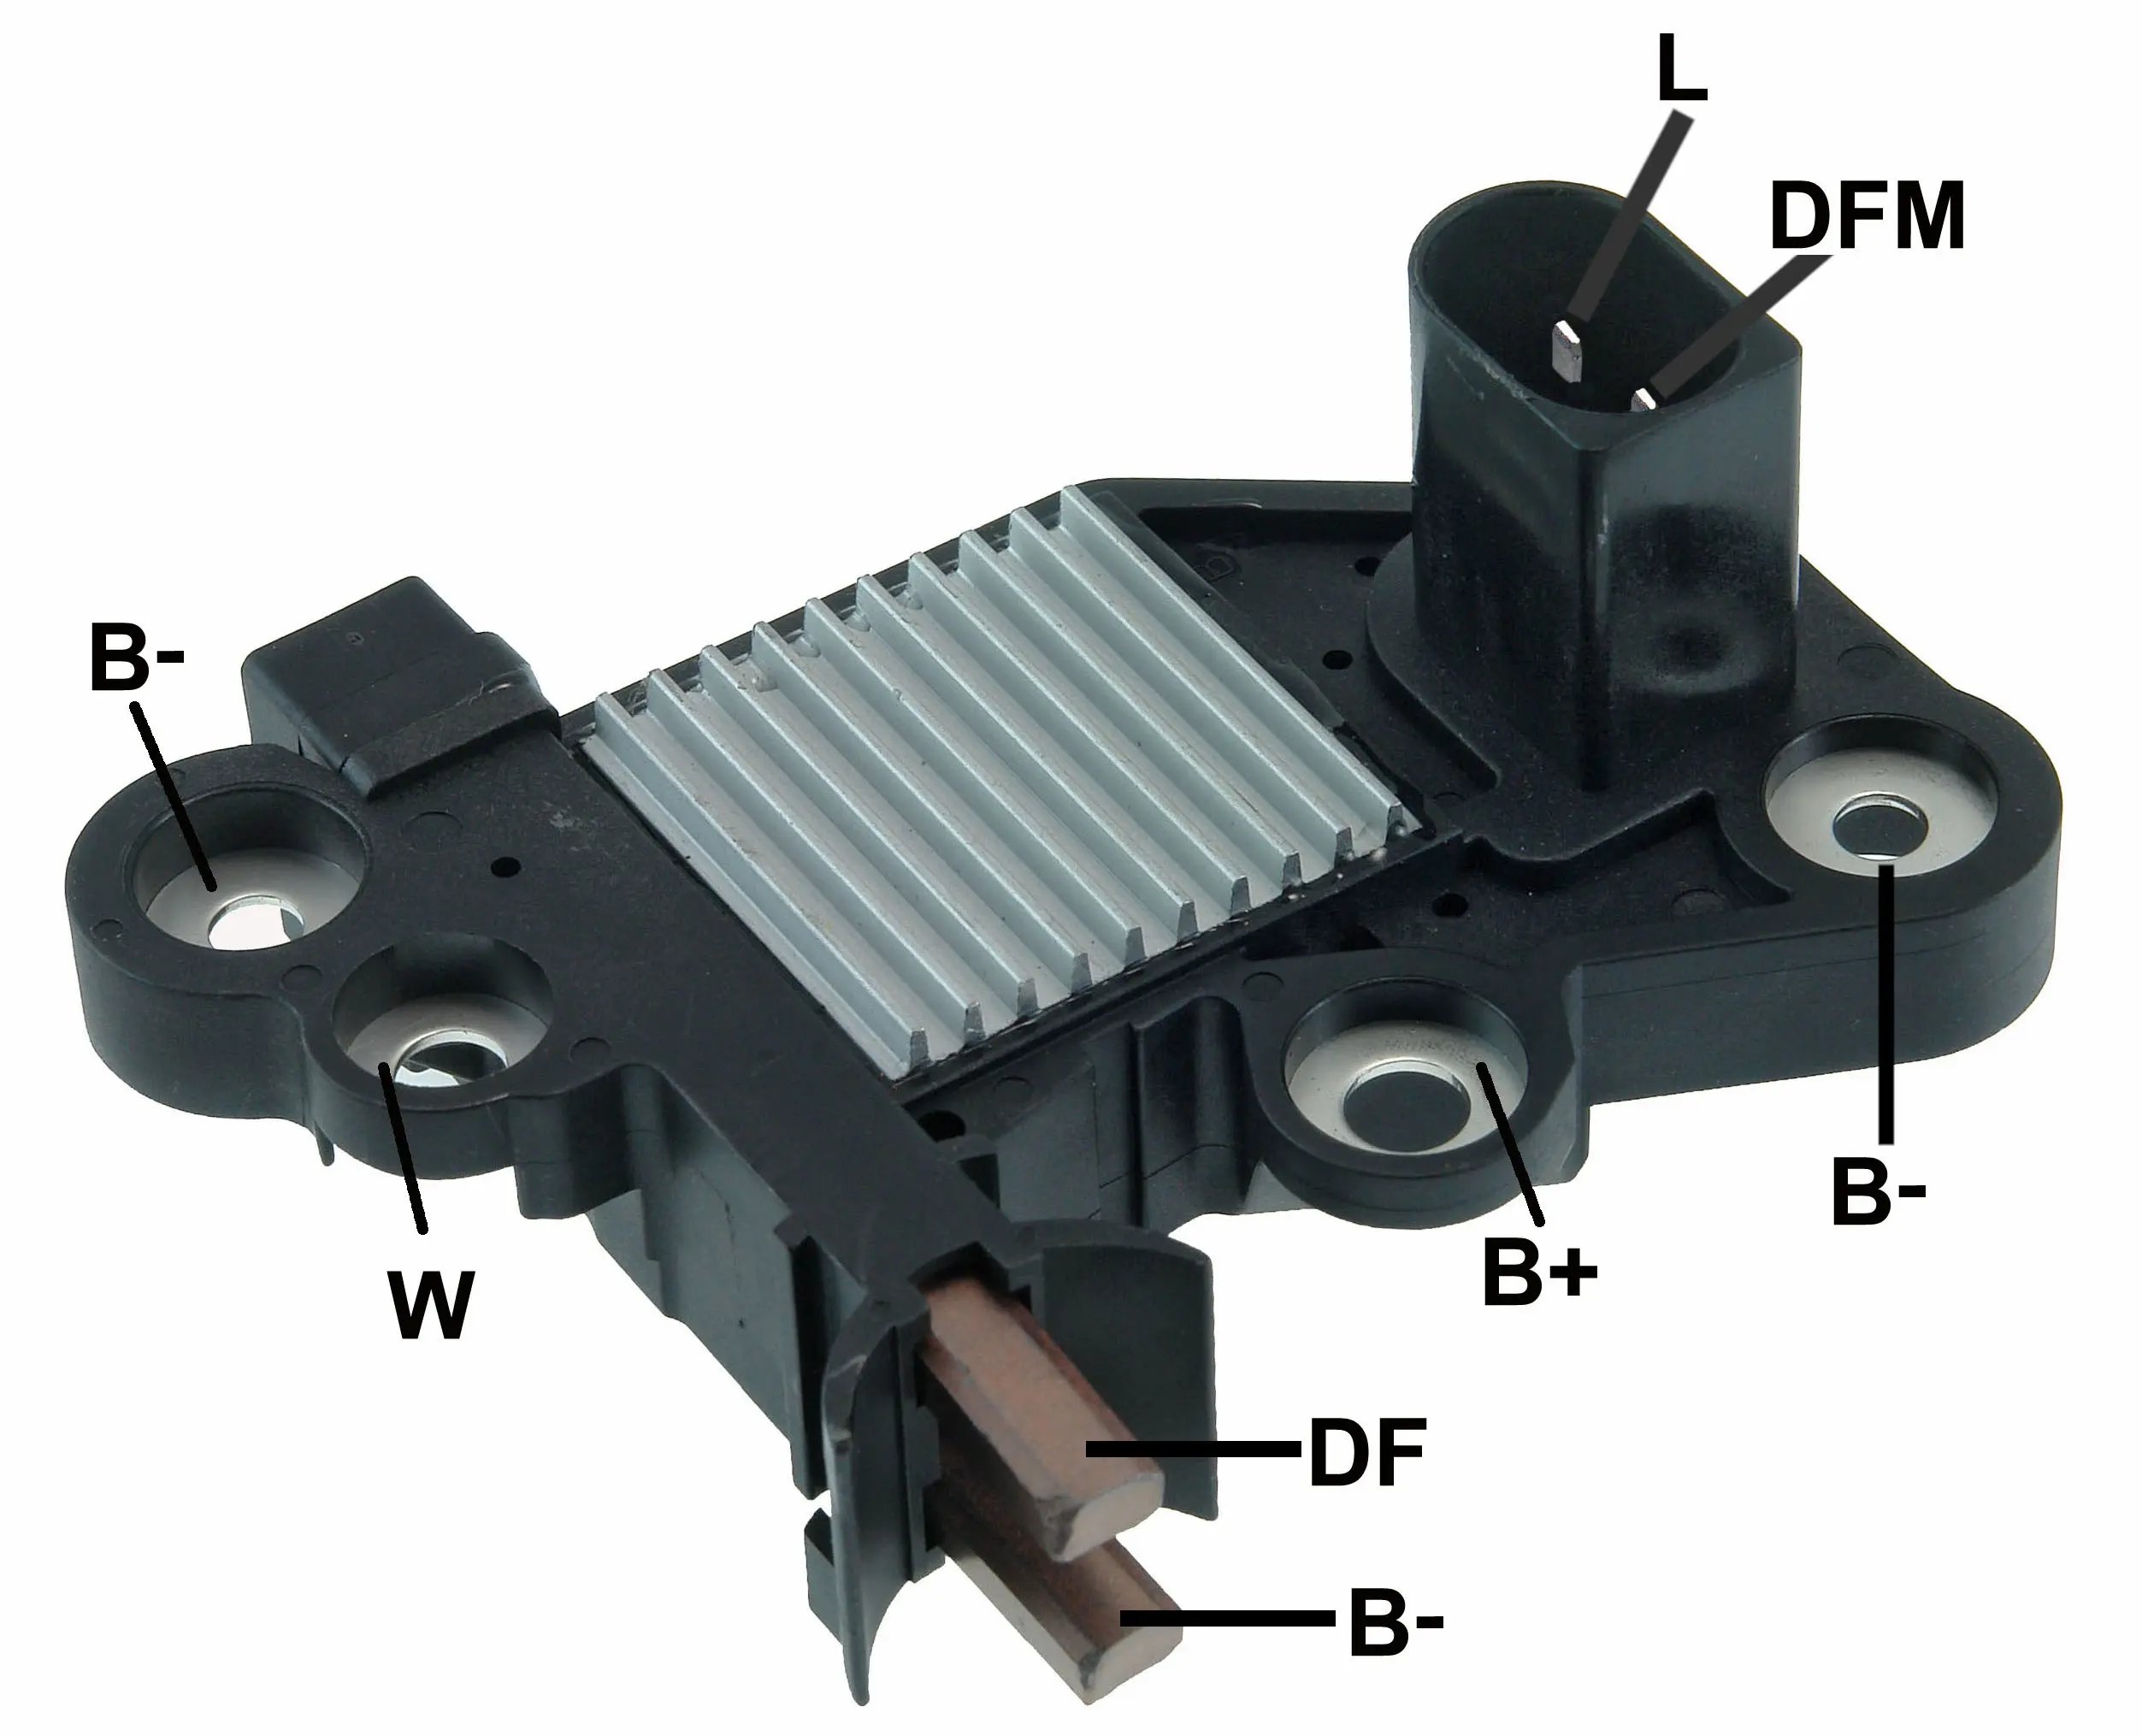 Regulador de Voltaje para Alternador, GA343,Bosch: F000BL9012; VW: 0272220701, 1275200001,Regulador de Voltaje